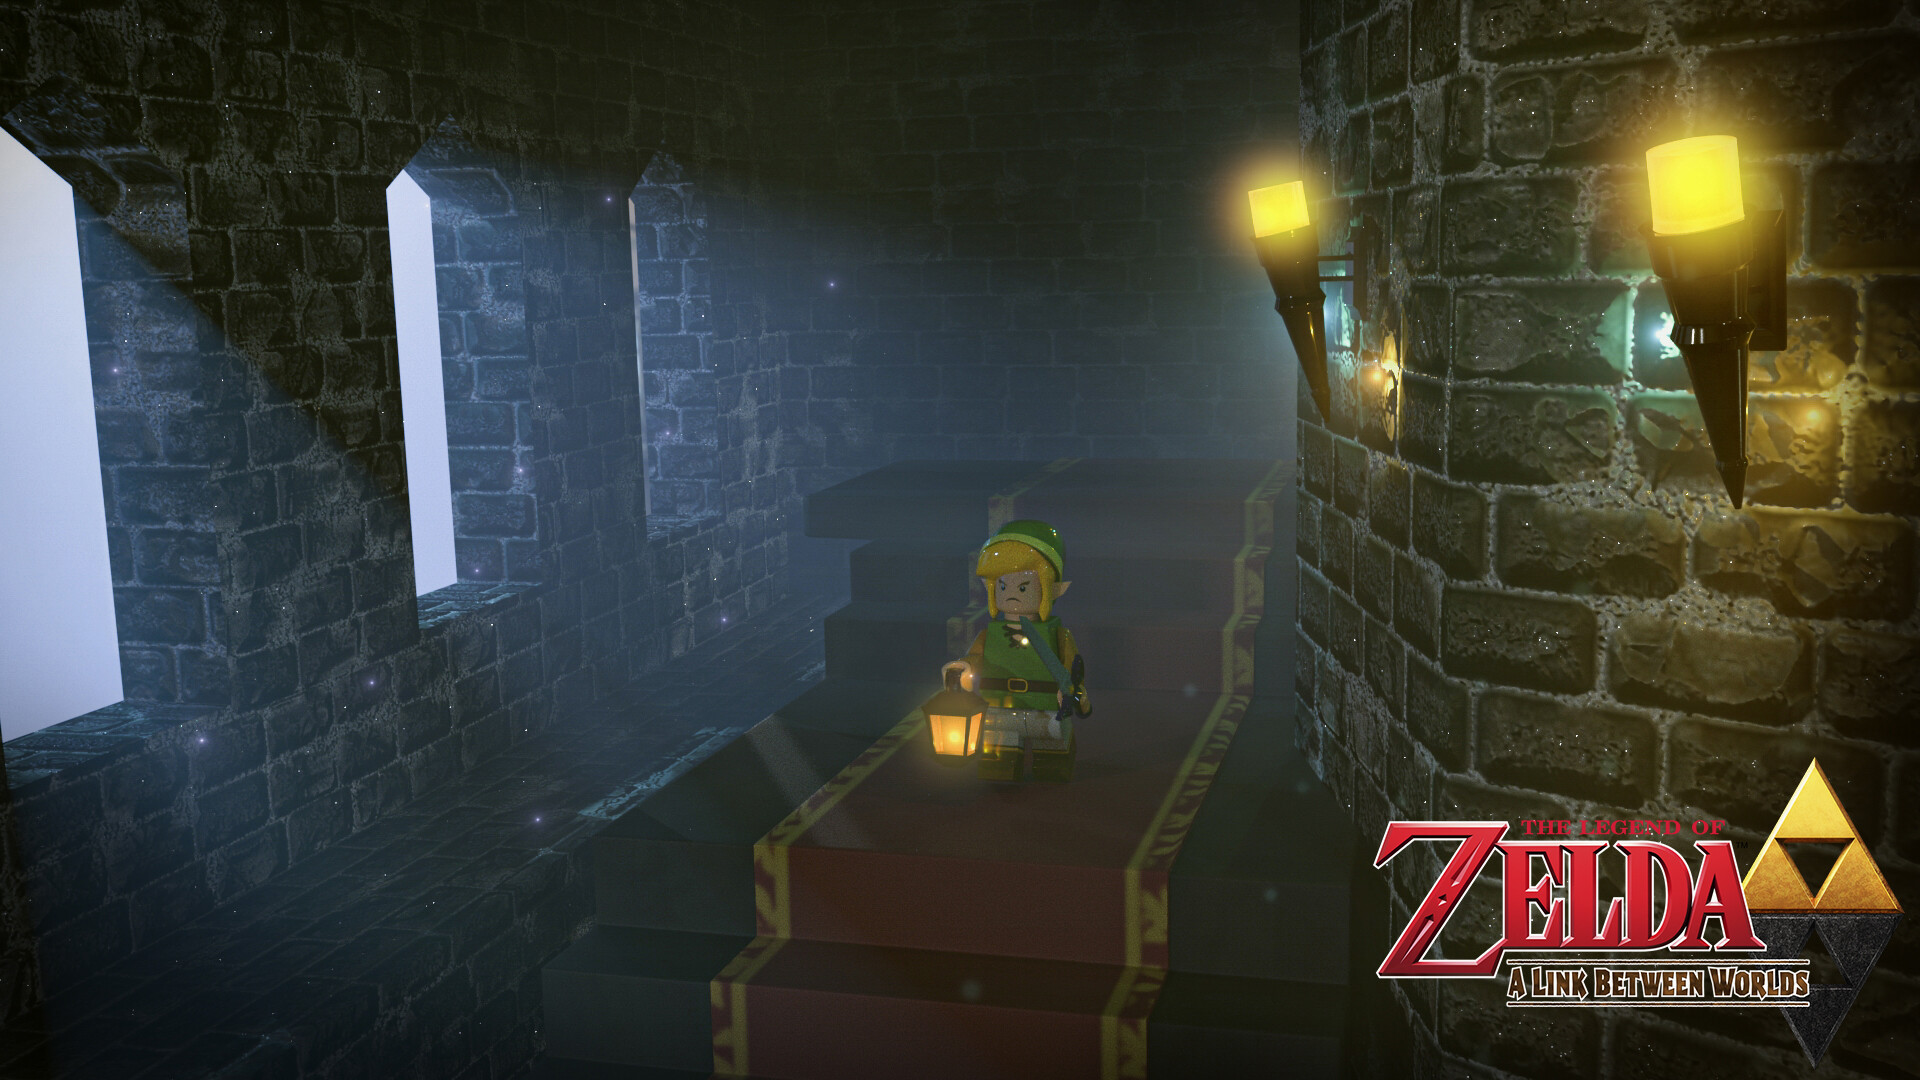 LEGO FanArt legend of Zelda: A Link between worlds